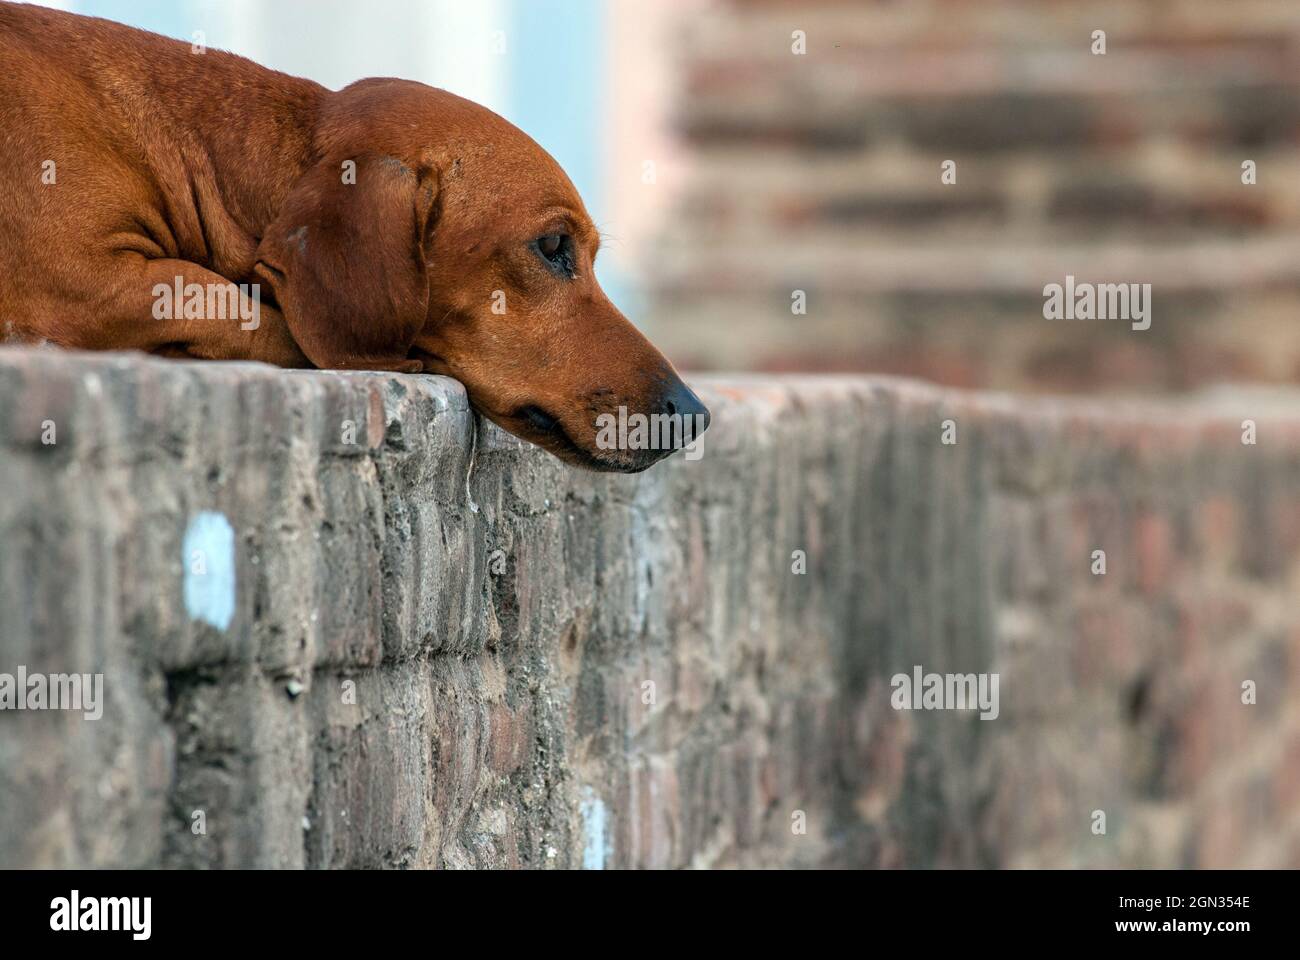 Thinking Dog, Havana, Cuba, uppies, brown, mammal, purebred, breed, domestic, appearance, head, small, think, thinking dog Stock Photo